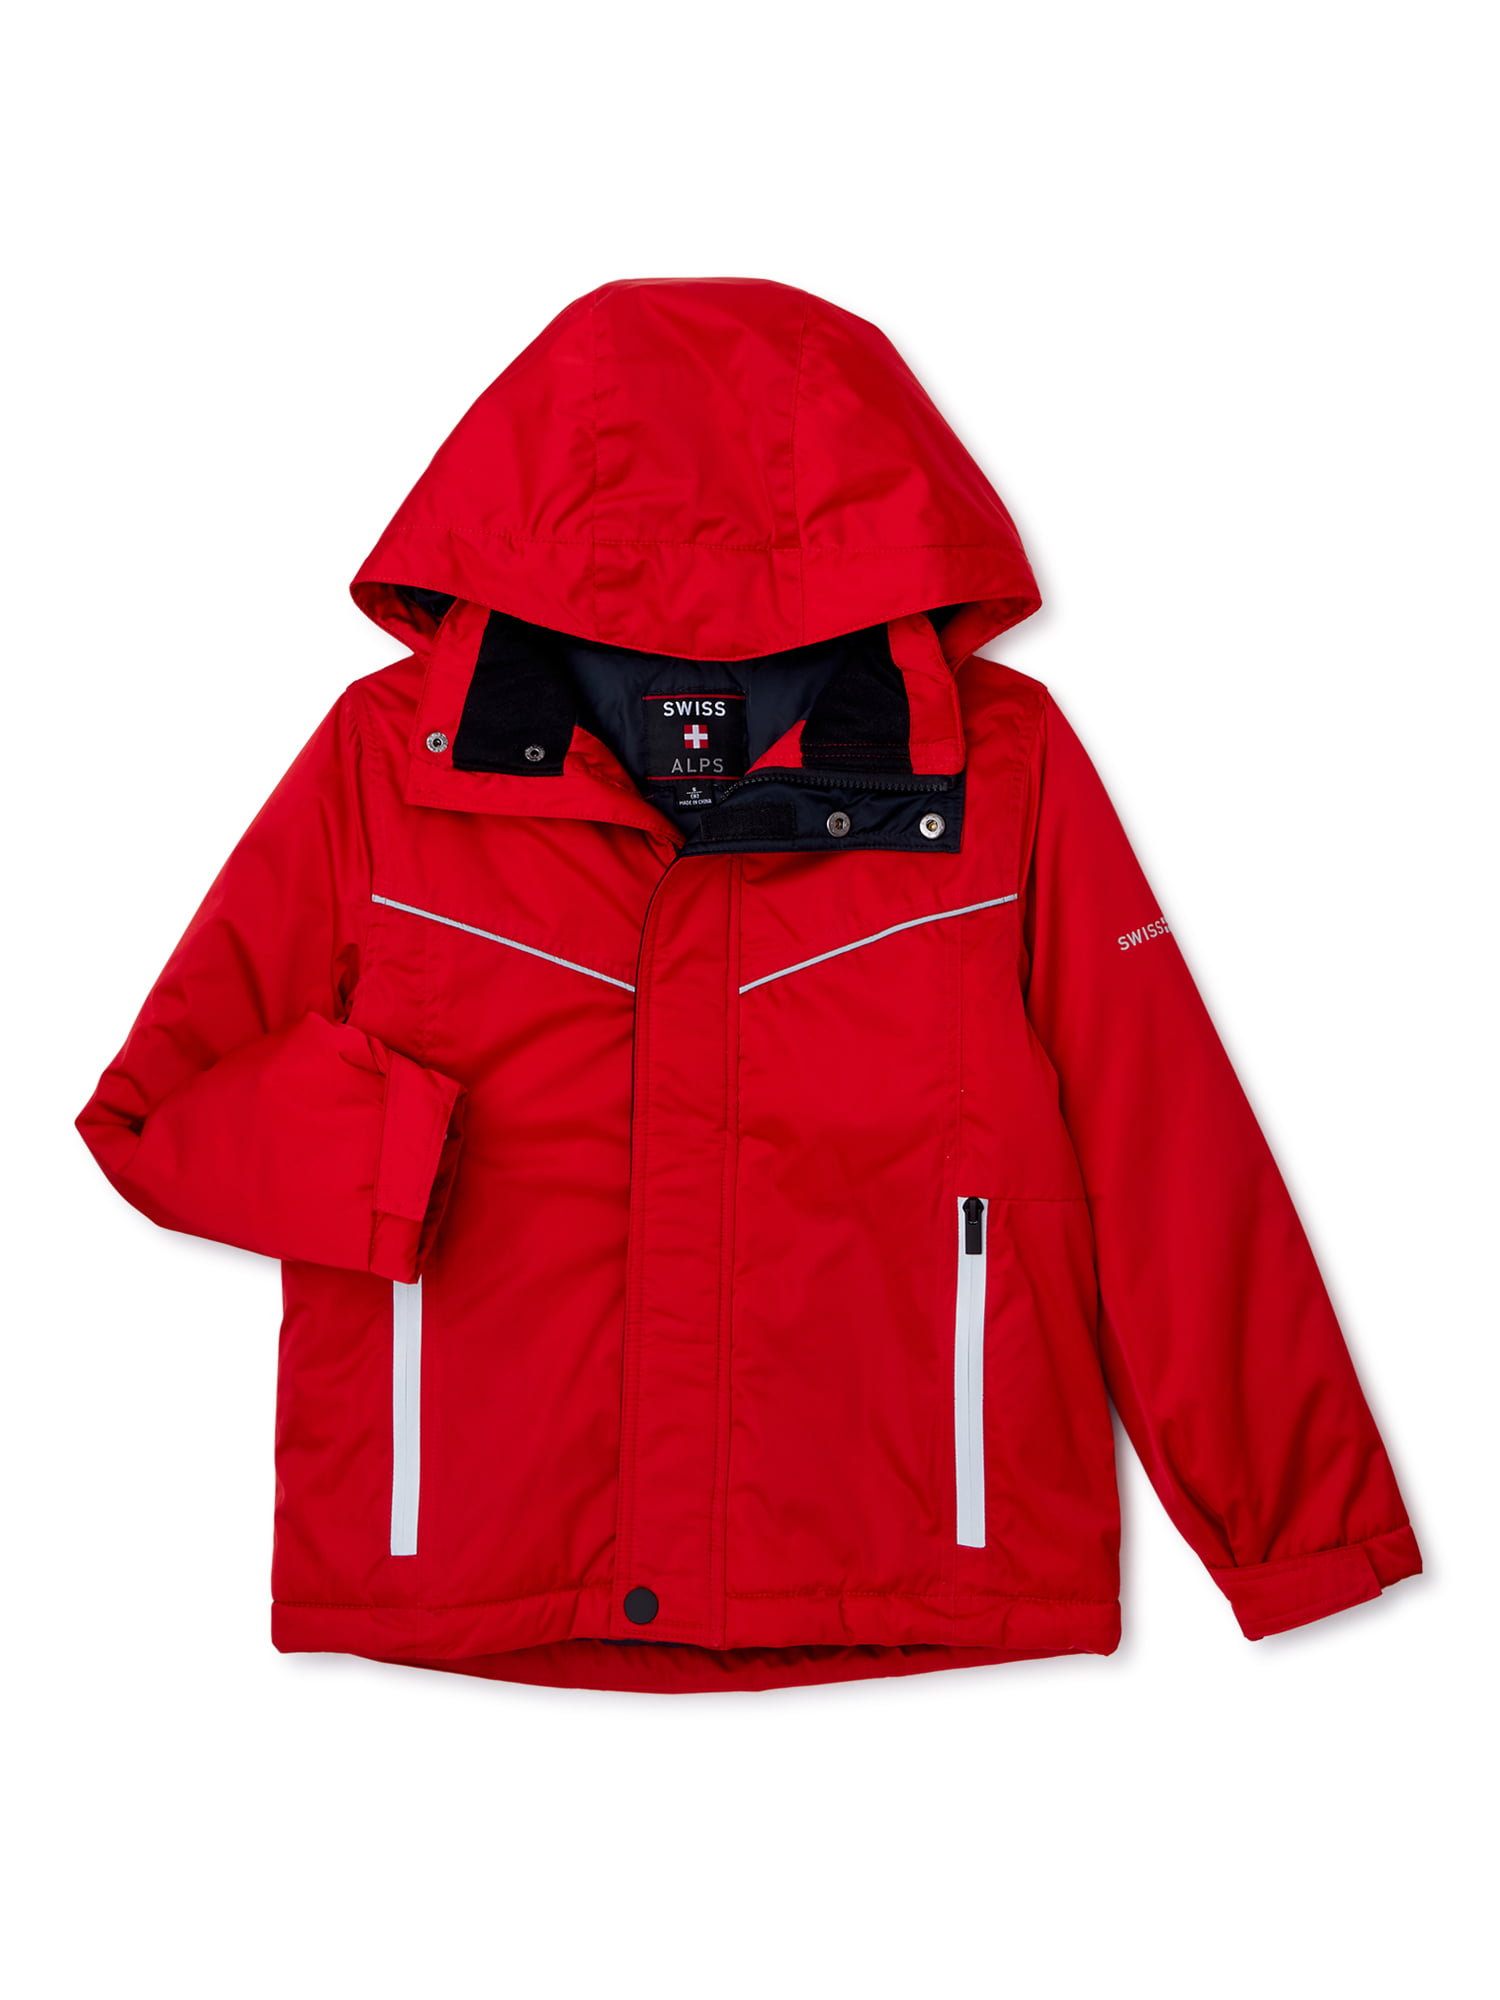 Swiss Alps Boys Wind Resistant Lightweight Rain Jacket 